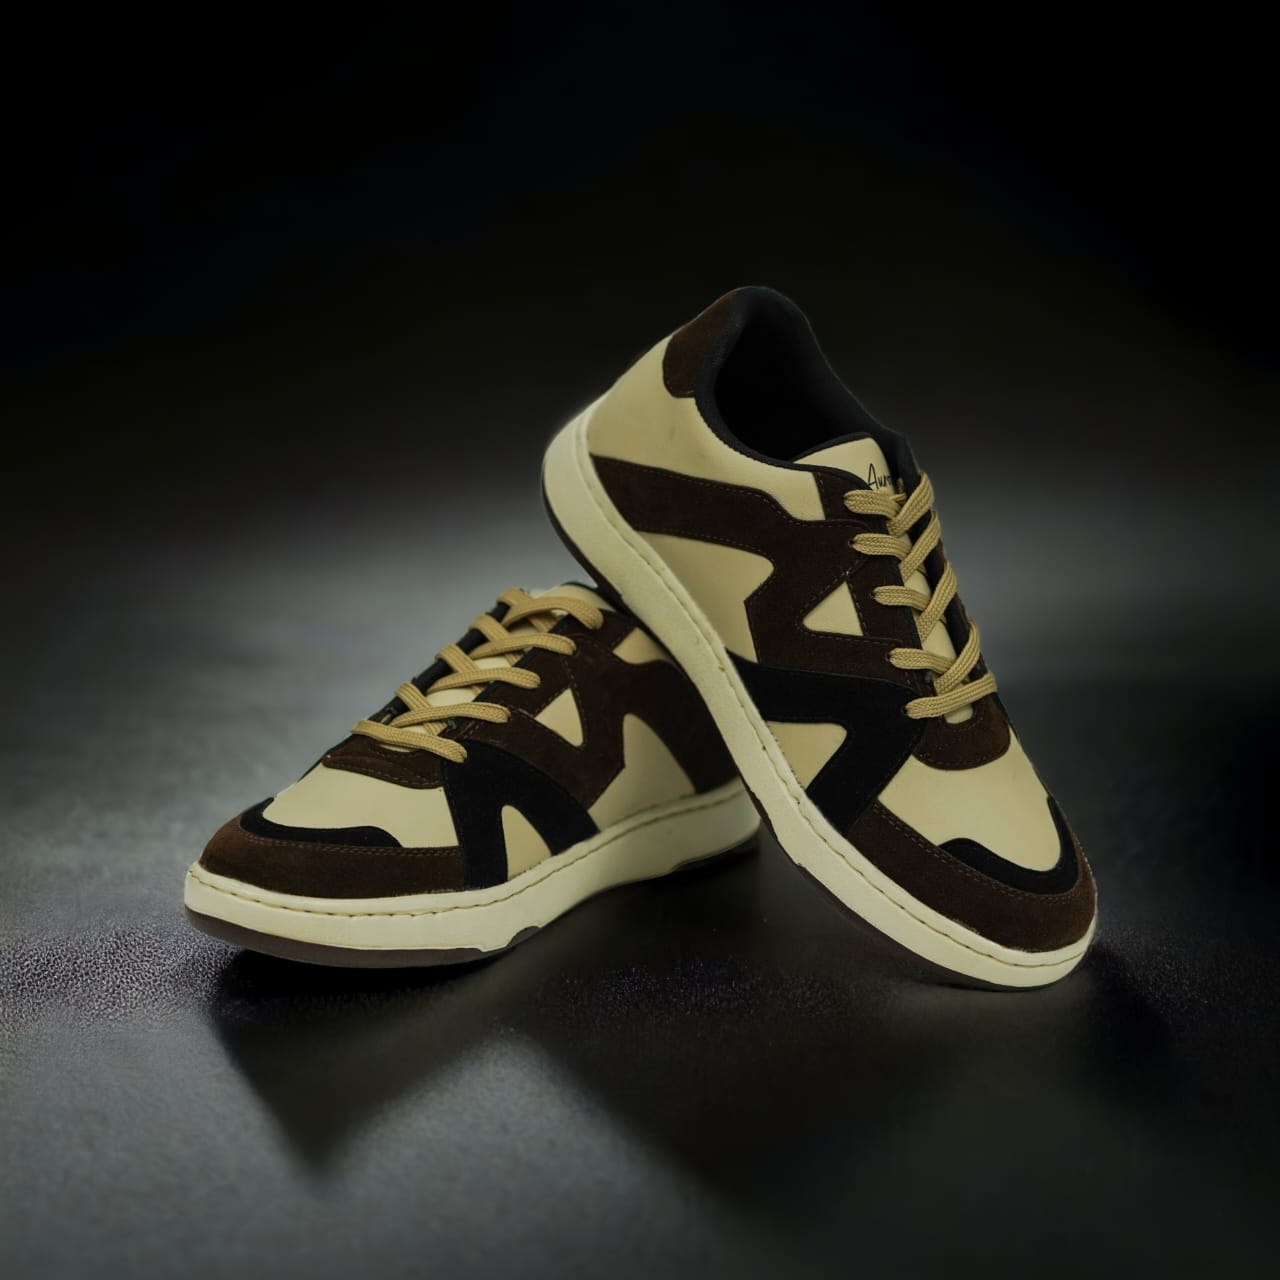 The Aurous Evoke Brown Laceup Sneakers